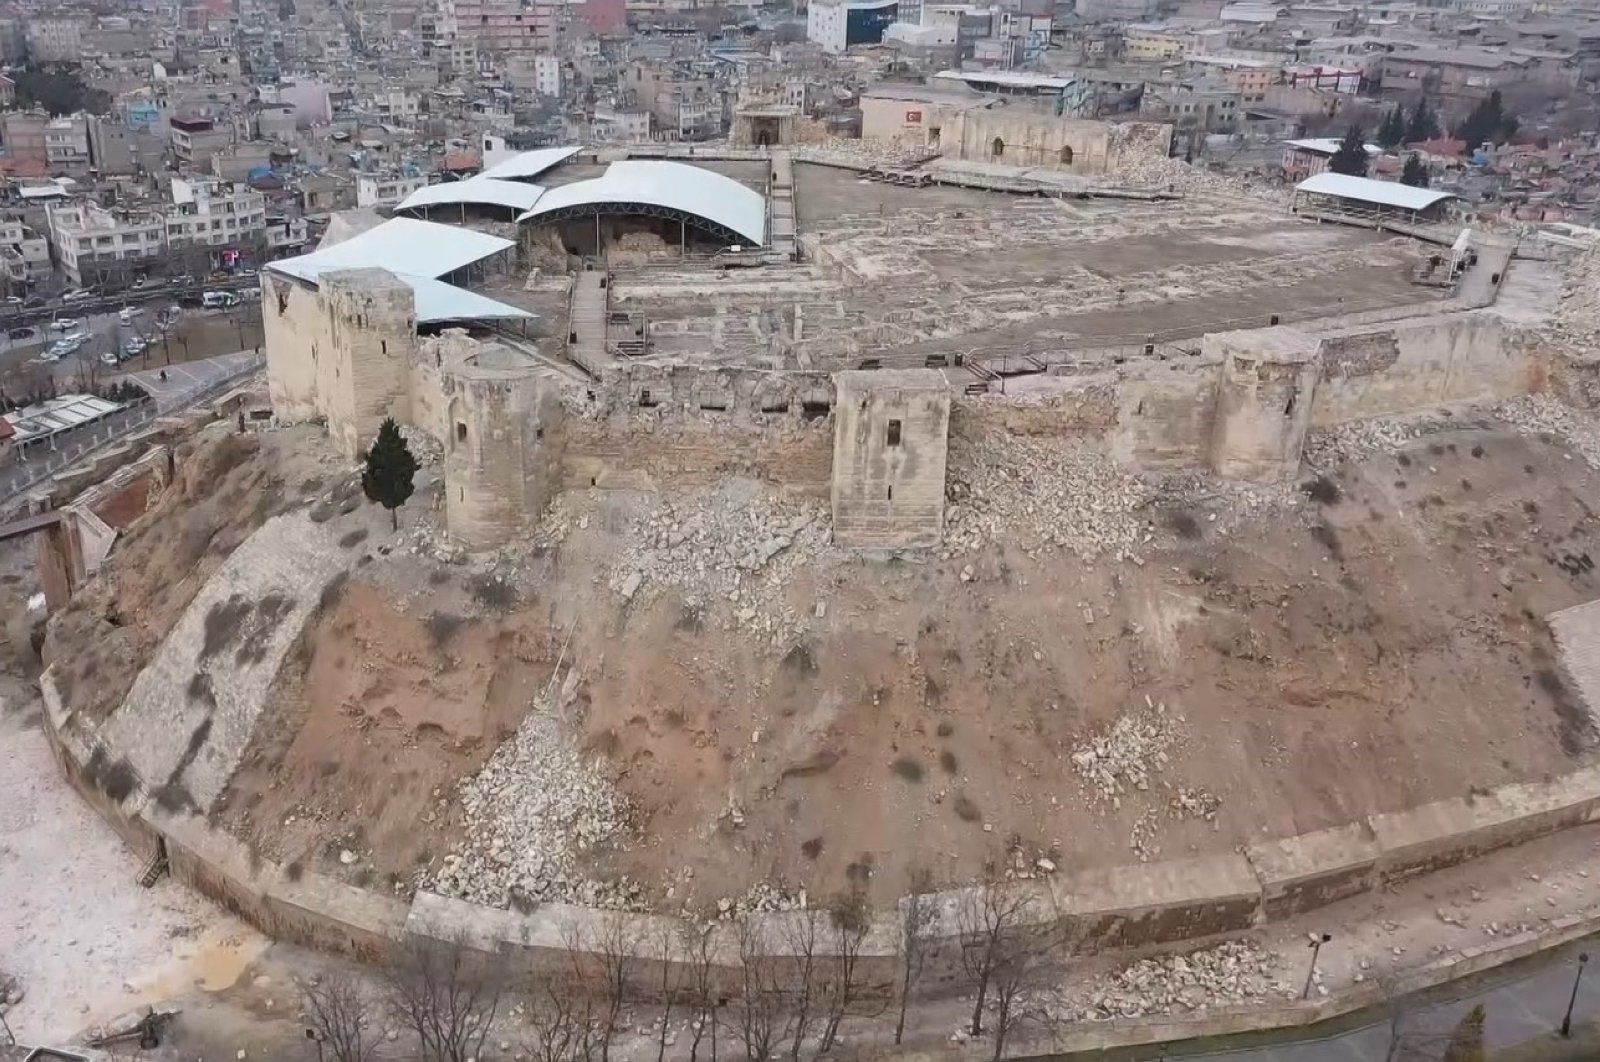 ‘Museum Gempa’ akan dibuka di Gaziantep yang dilanda bencana